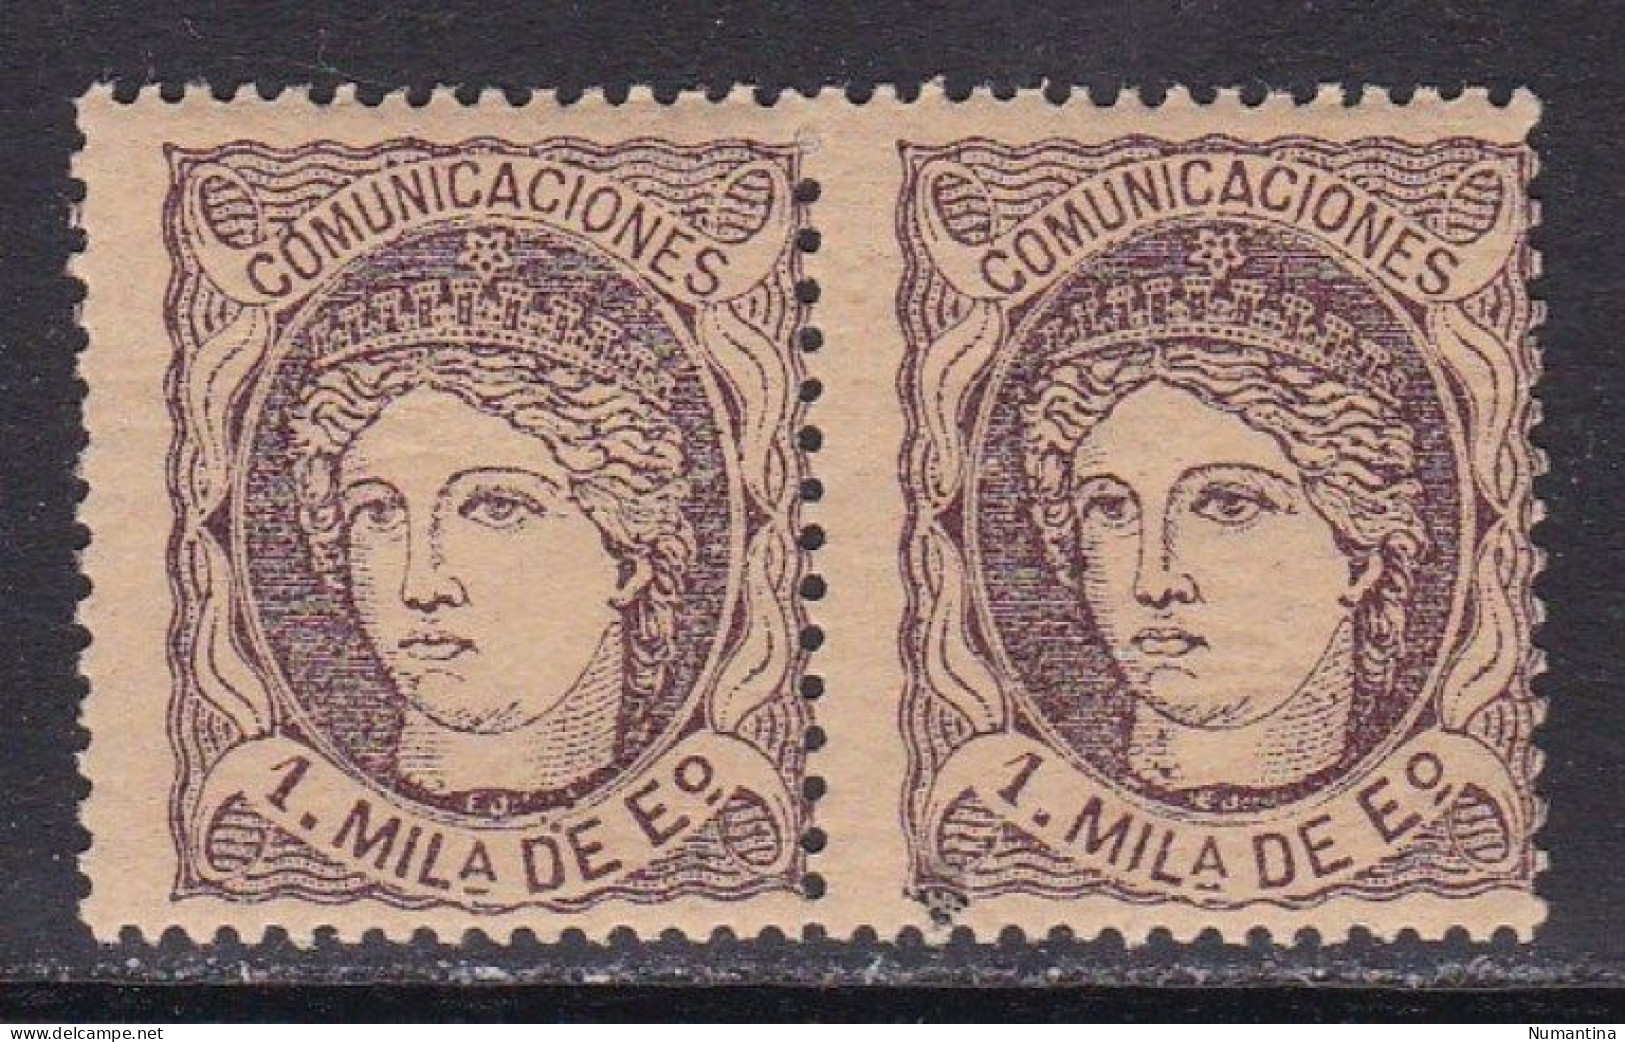 1870 - España - Edifil 102 - Efigie Alegorica De España - Pareja Horizontal -  MNH - Ungebraucht